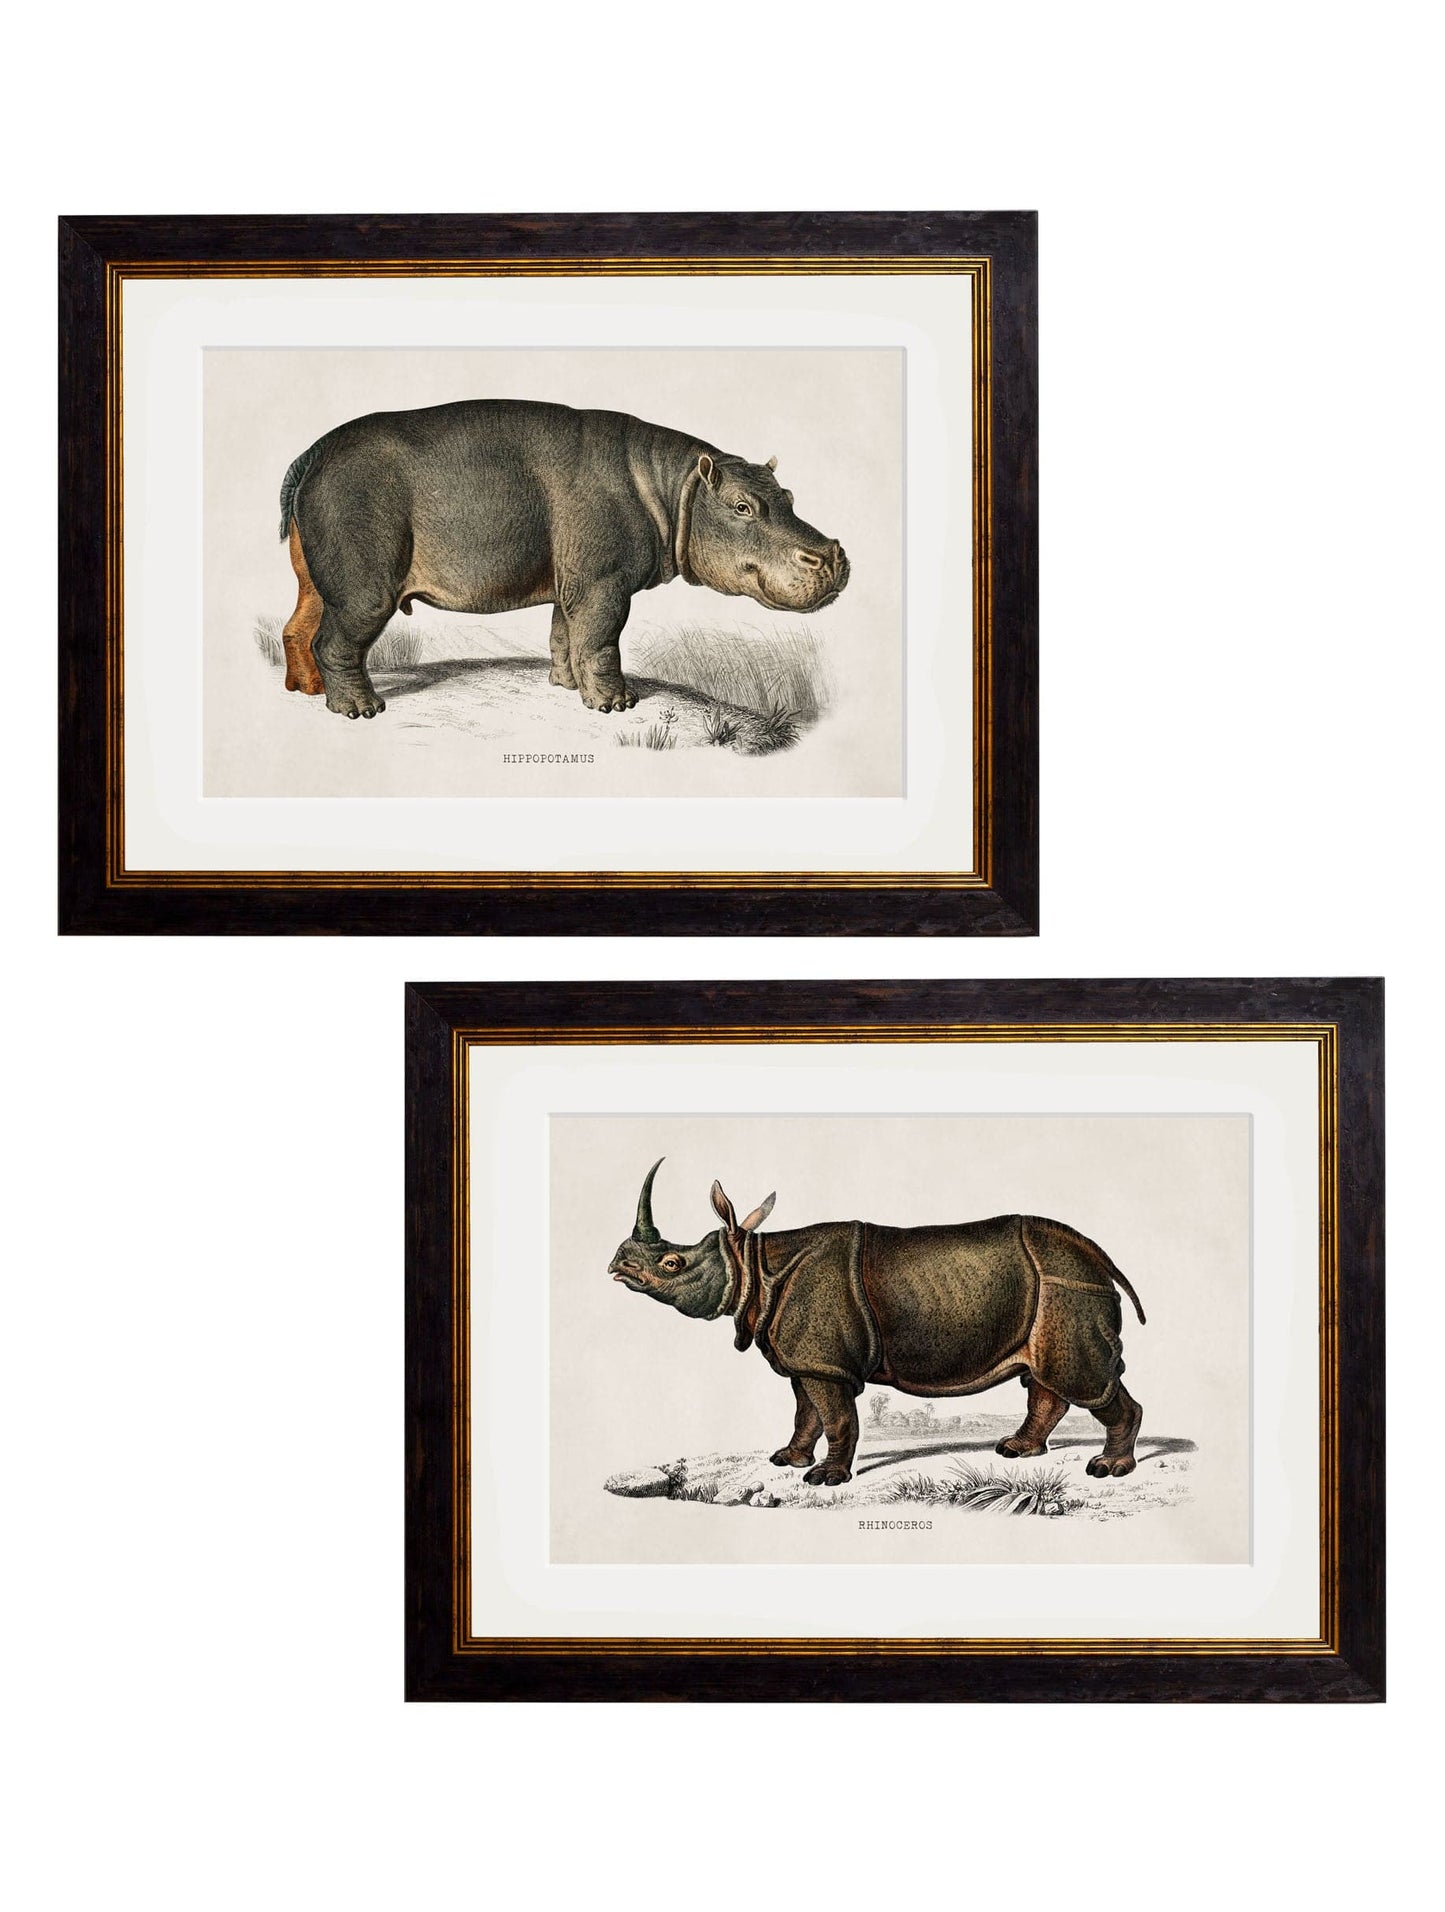 C.1846 Rhino for sale - Woodcock and Cavendish